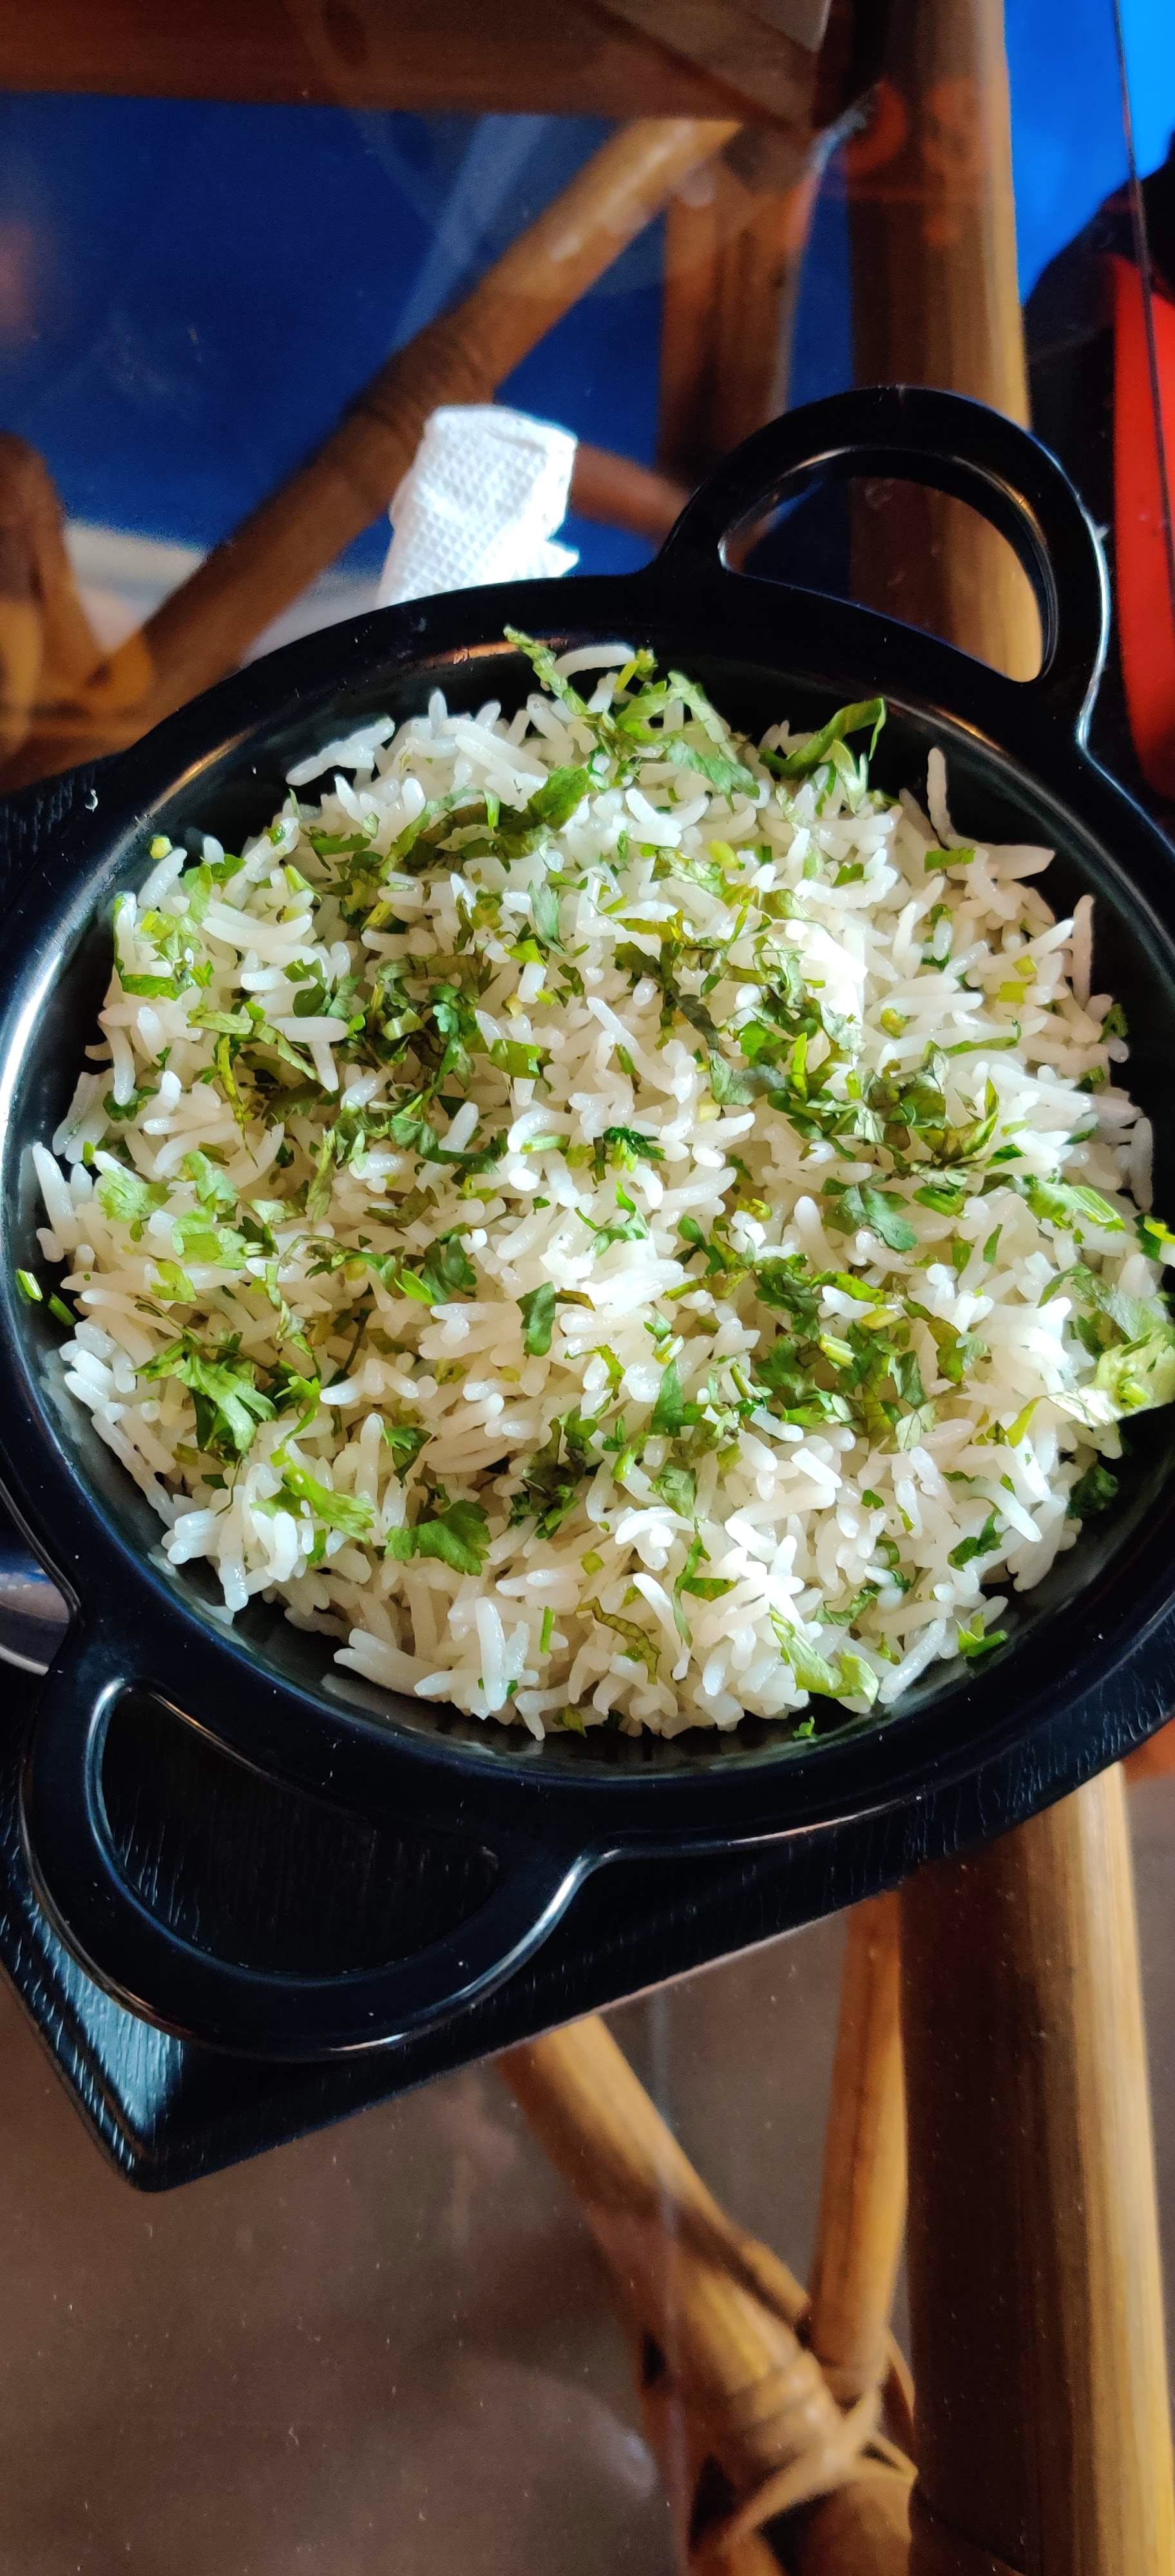 Dish,Food,Cuisine,Ingredient,Steamed rice,Produce,Recipe,Side dish,Basmati,Rice